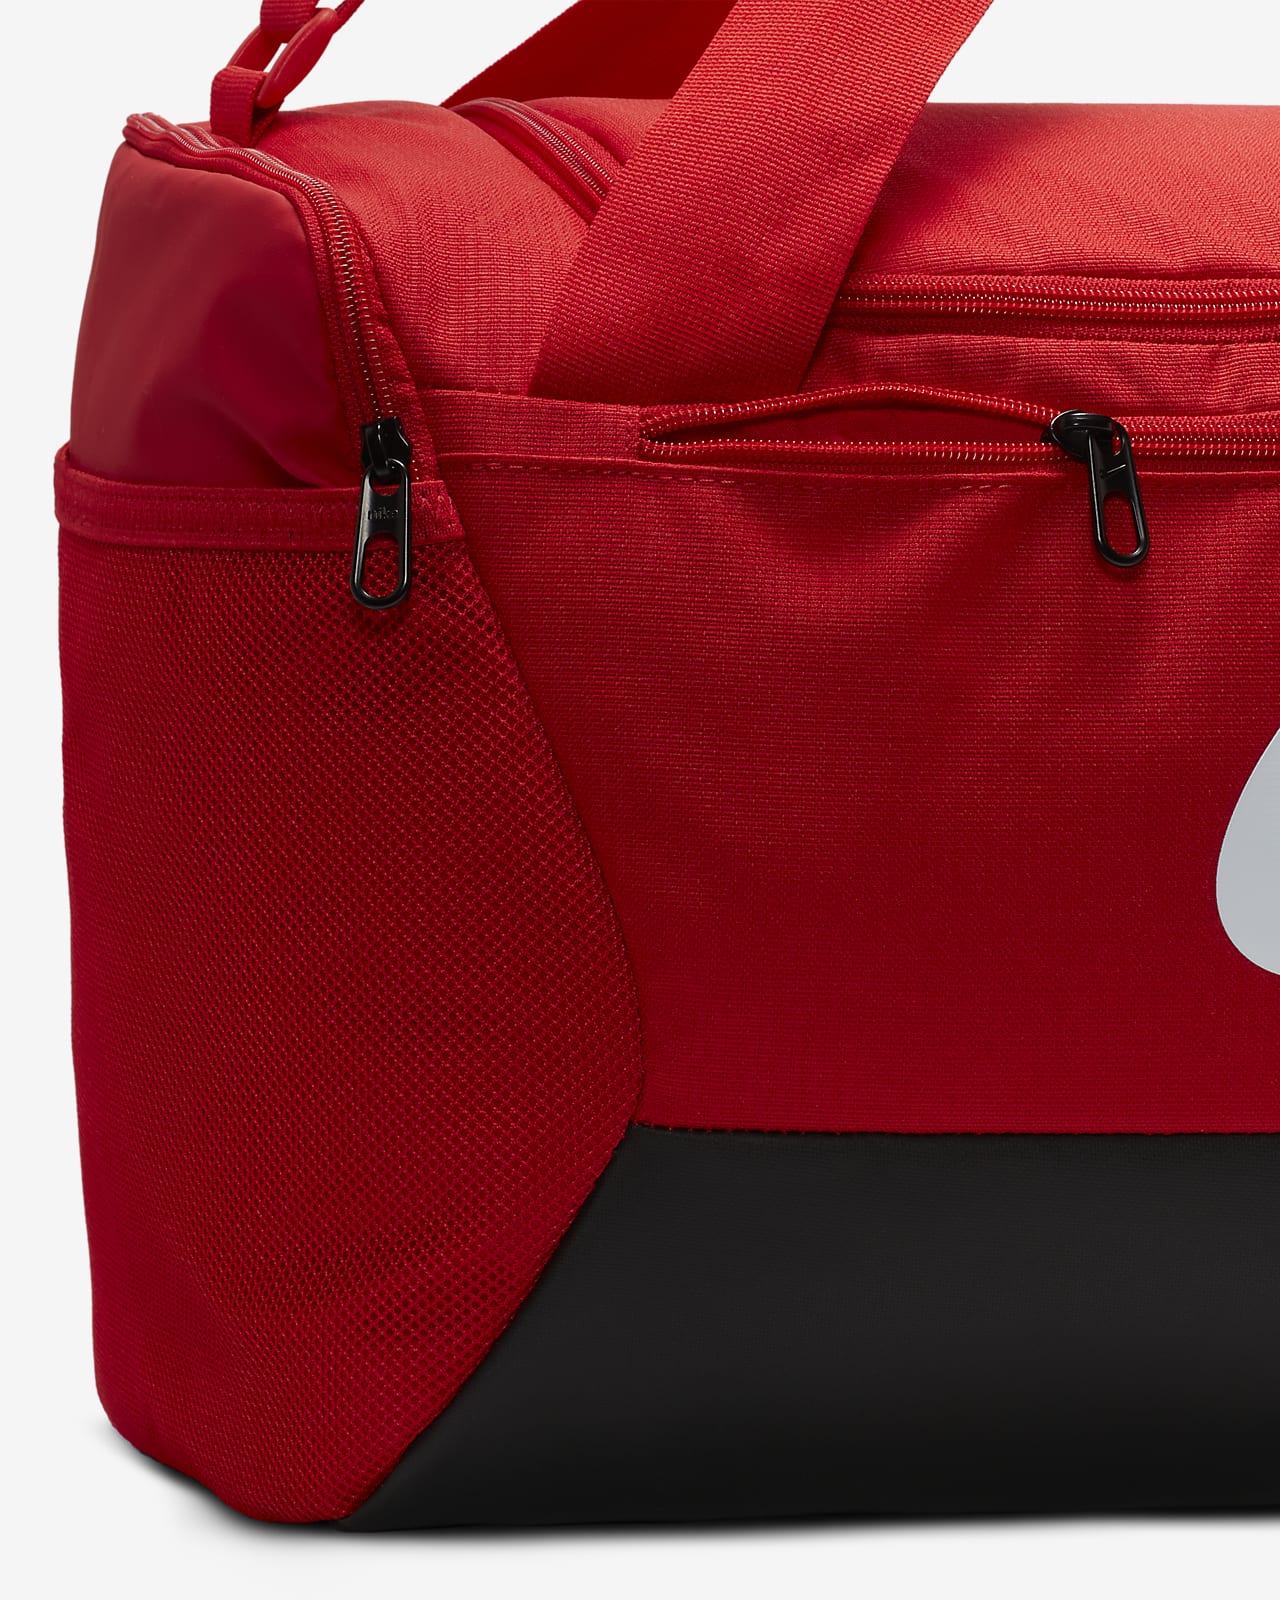 Nike Brasilia 9.5 Training Duffel Bag 41L (Small) - game royal